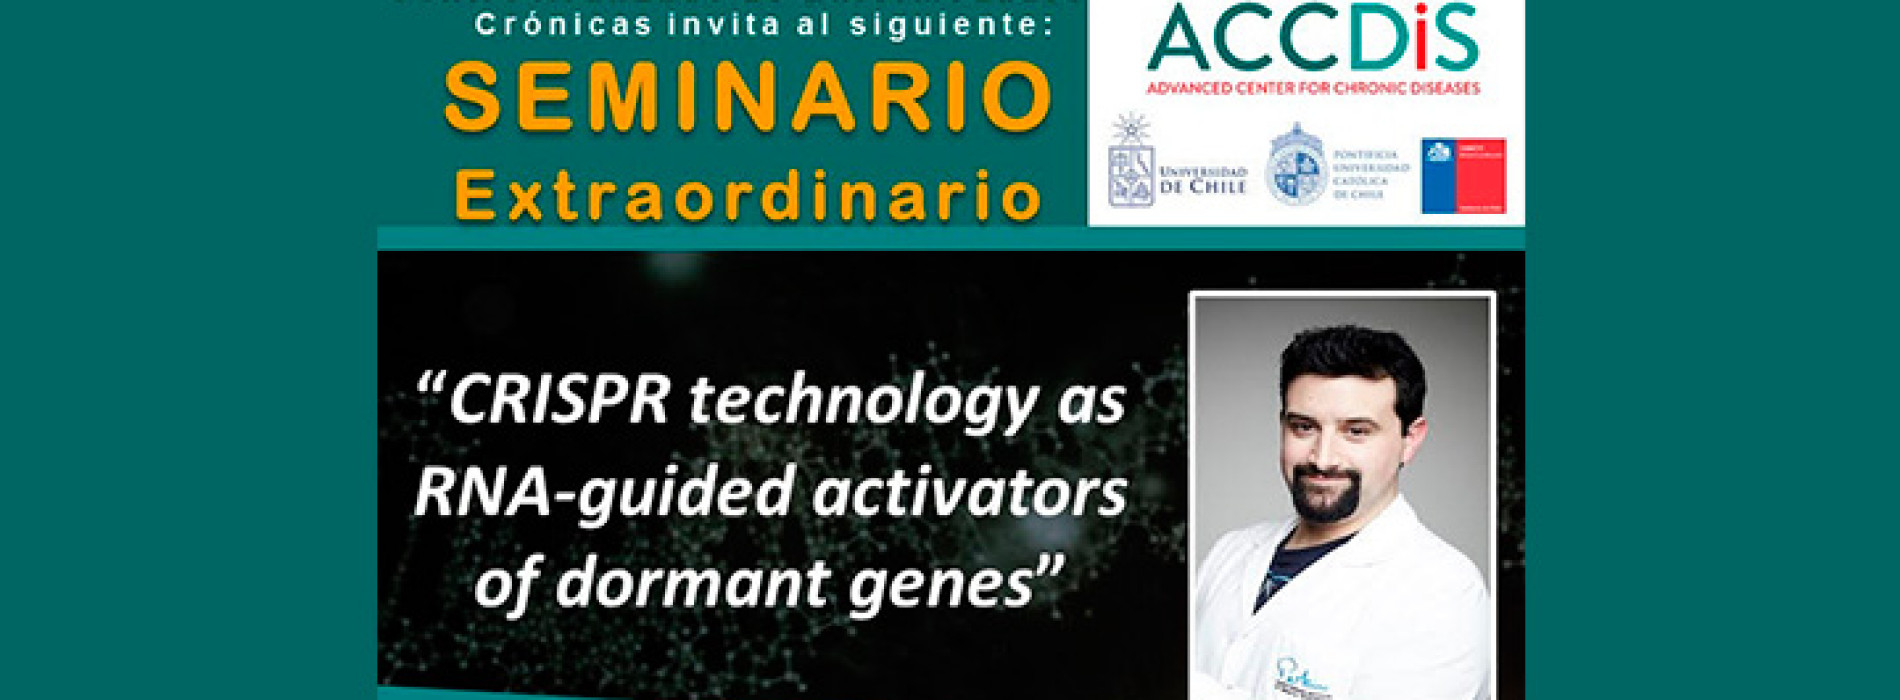 Extraordinary ACCDiS seminar "CRISPR technology as RNA-guided activators of dormant genes"